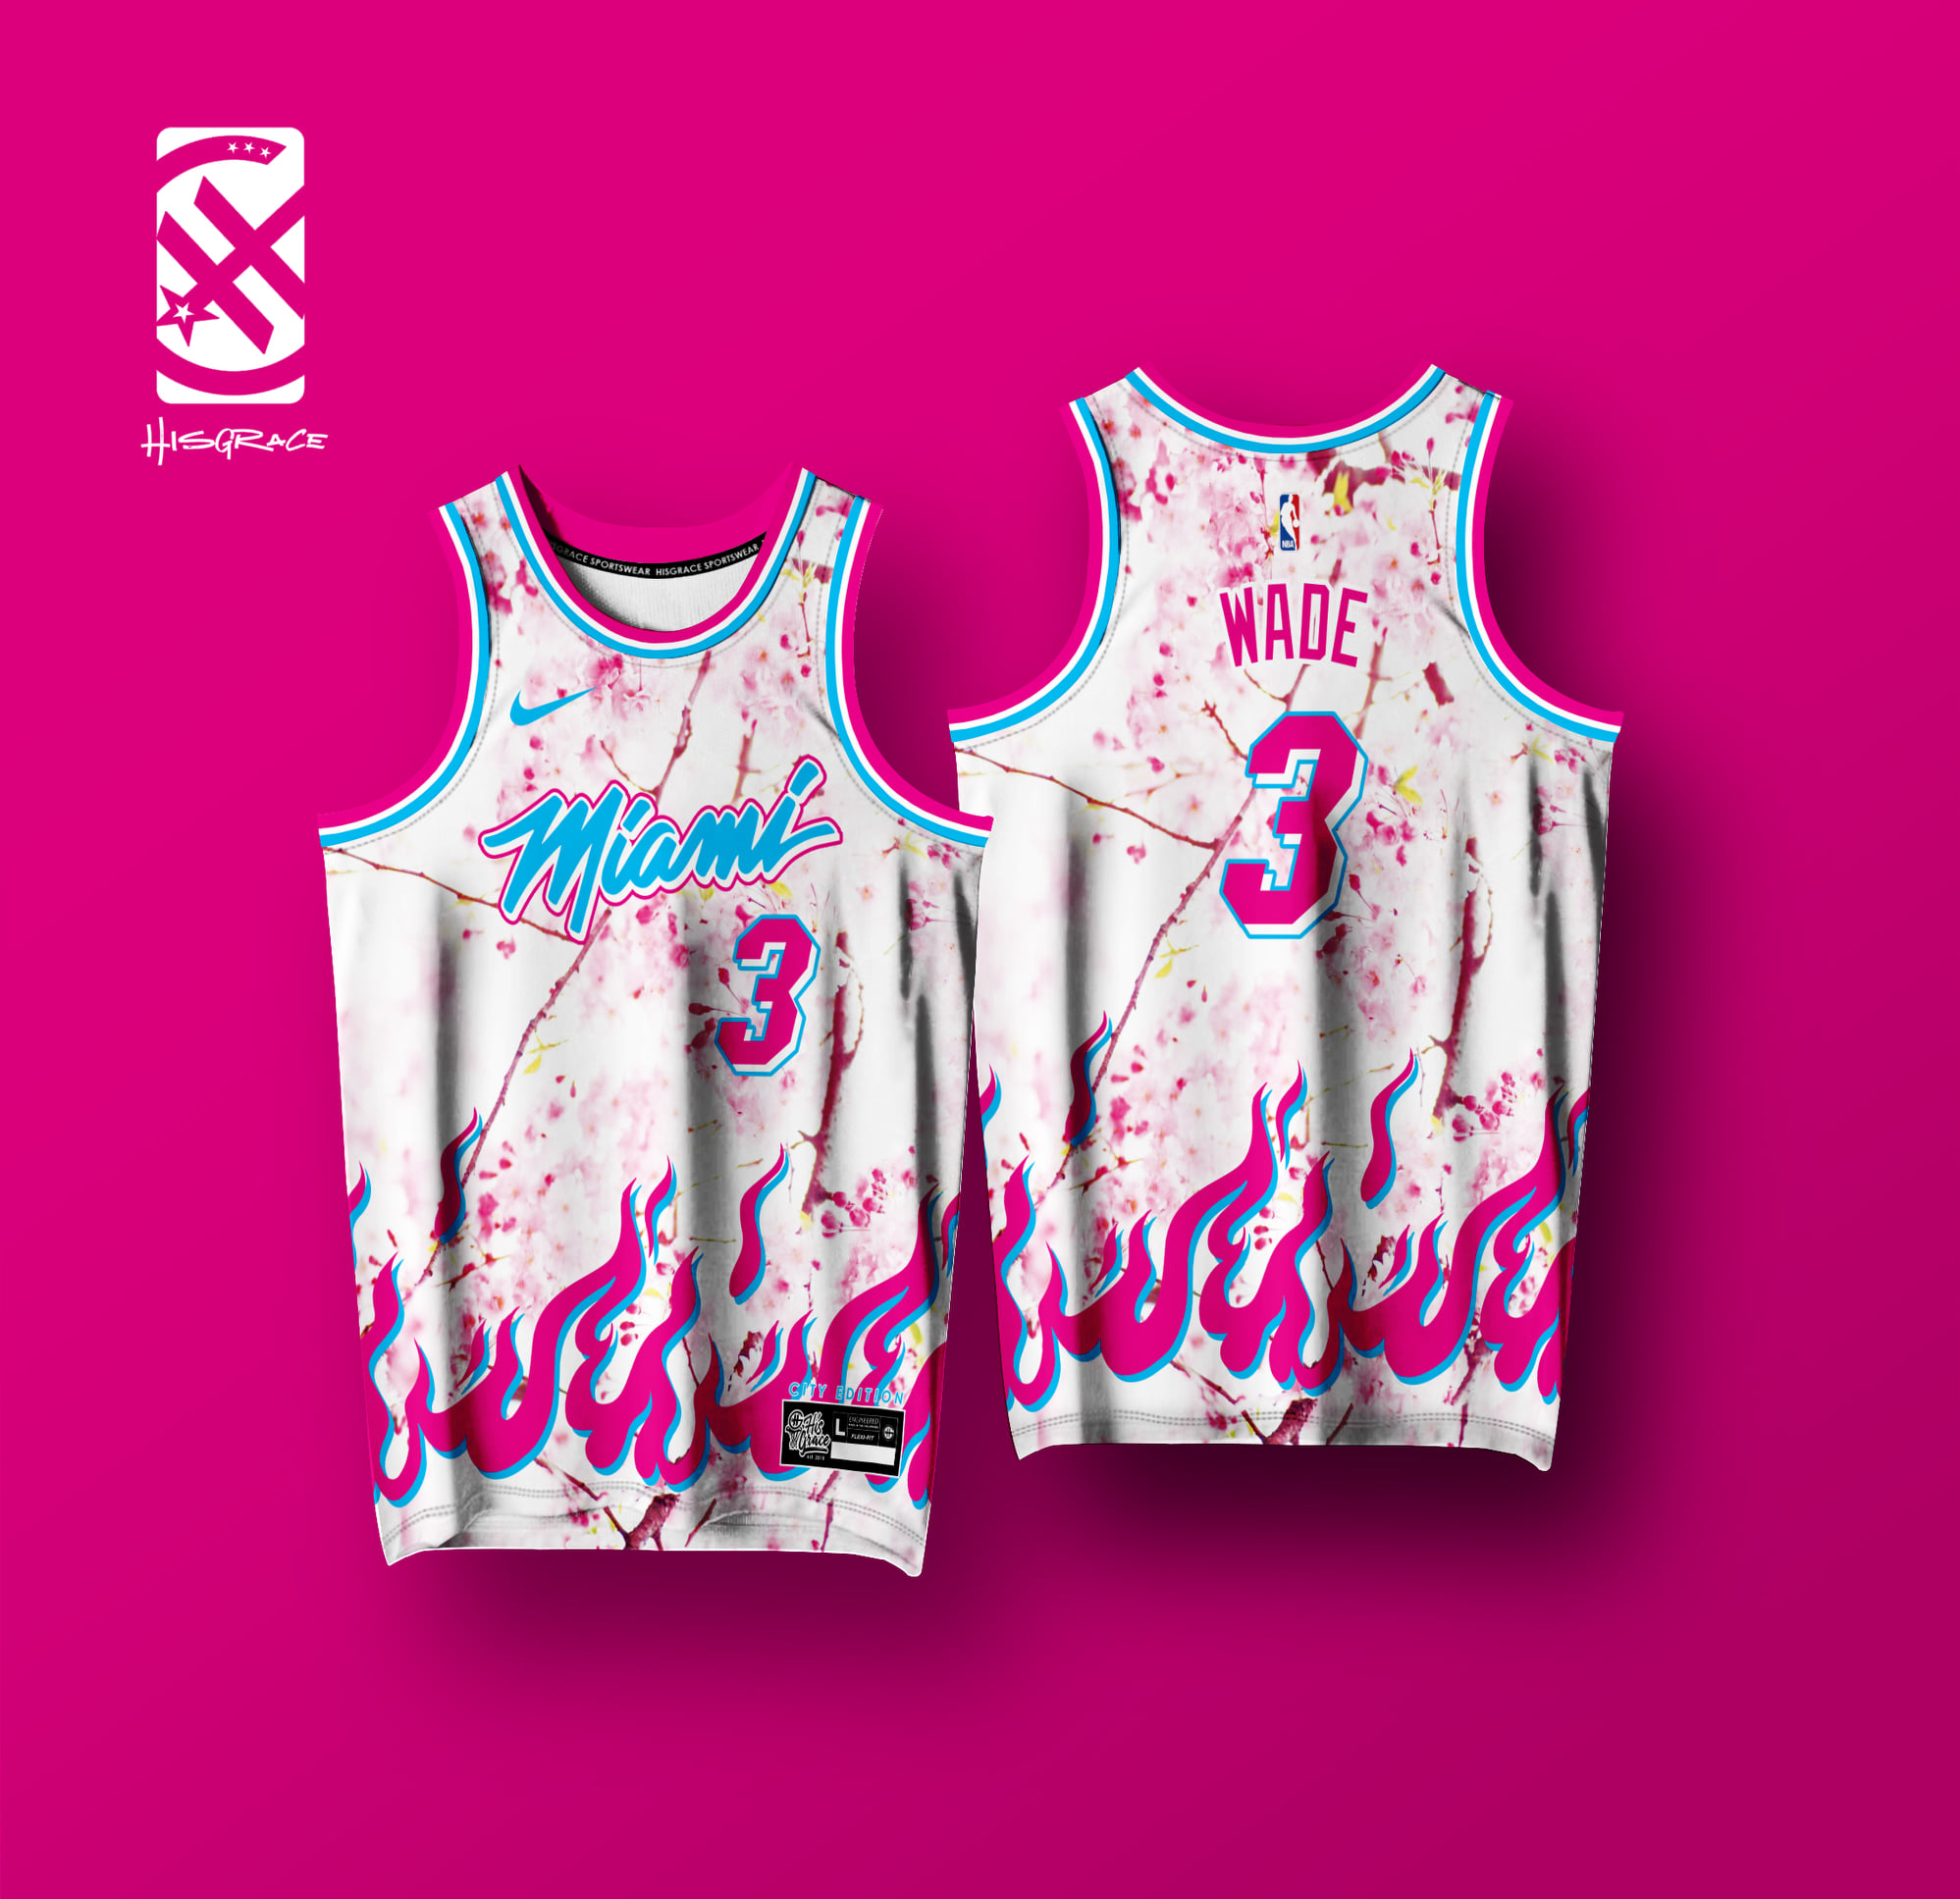  Miami Heat Jersey Pink